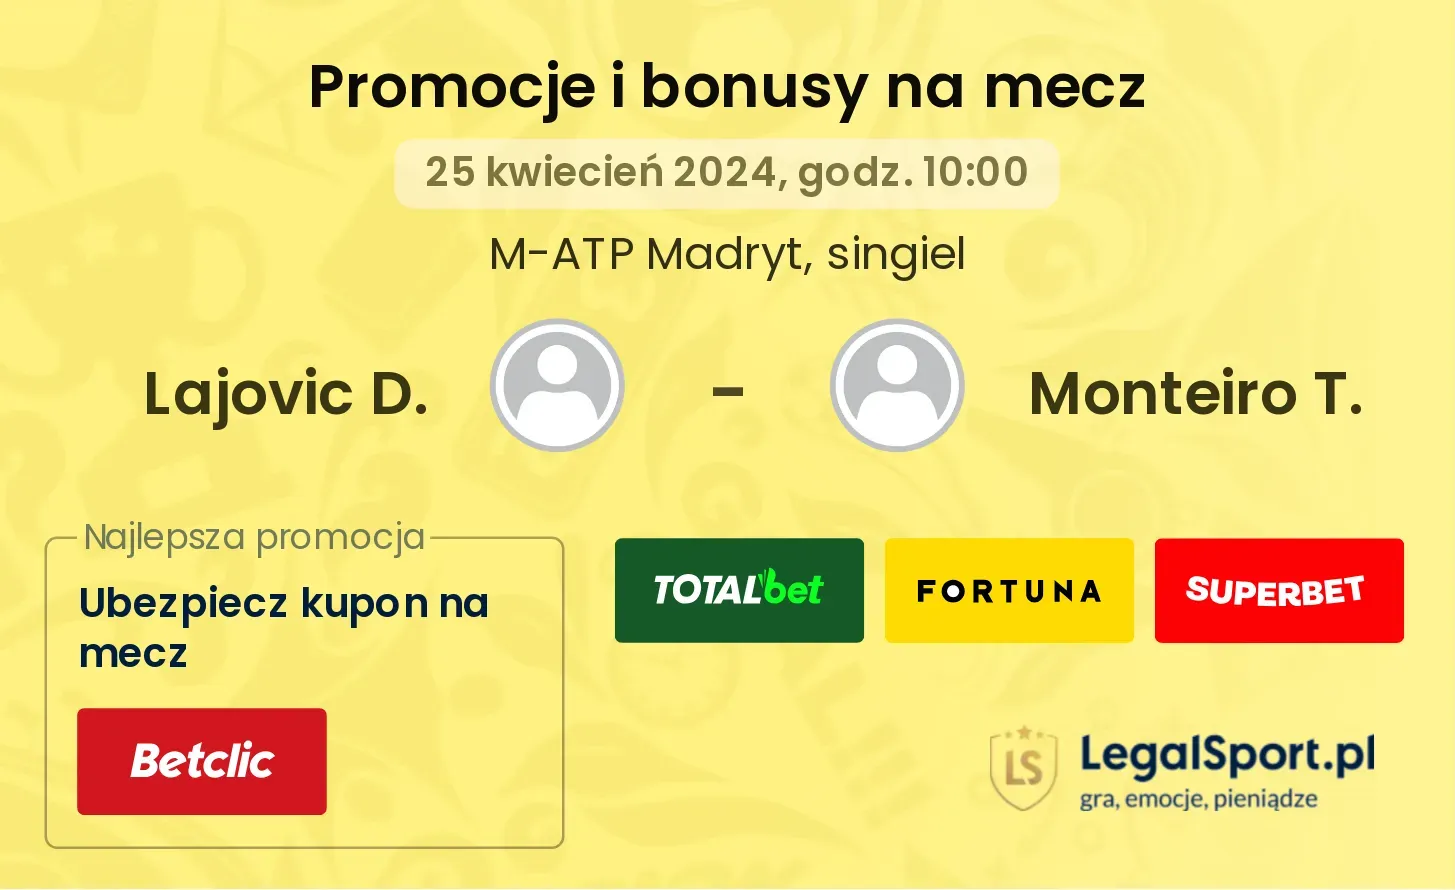 Lajovic D. - Monteiro T. promocje bonusy na mecz